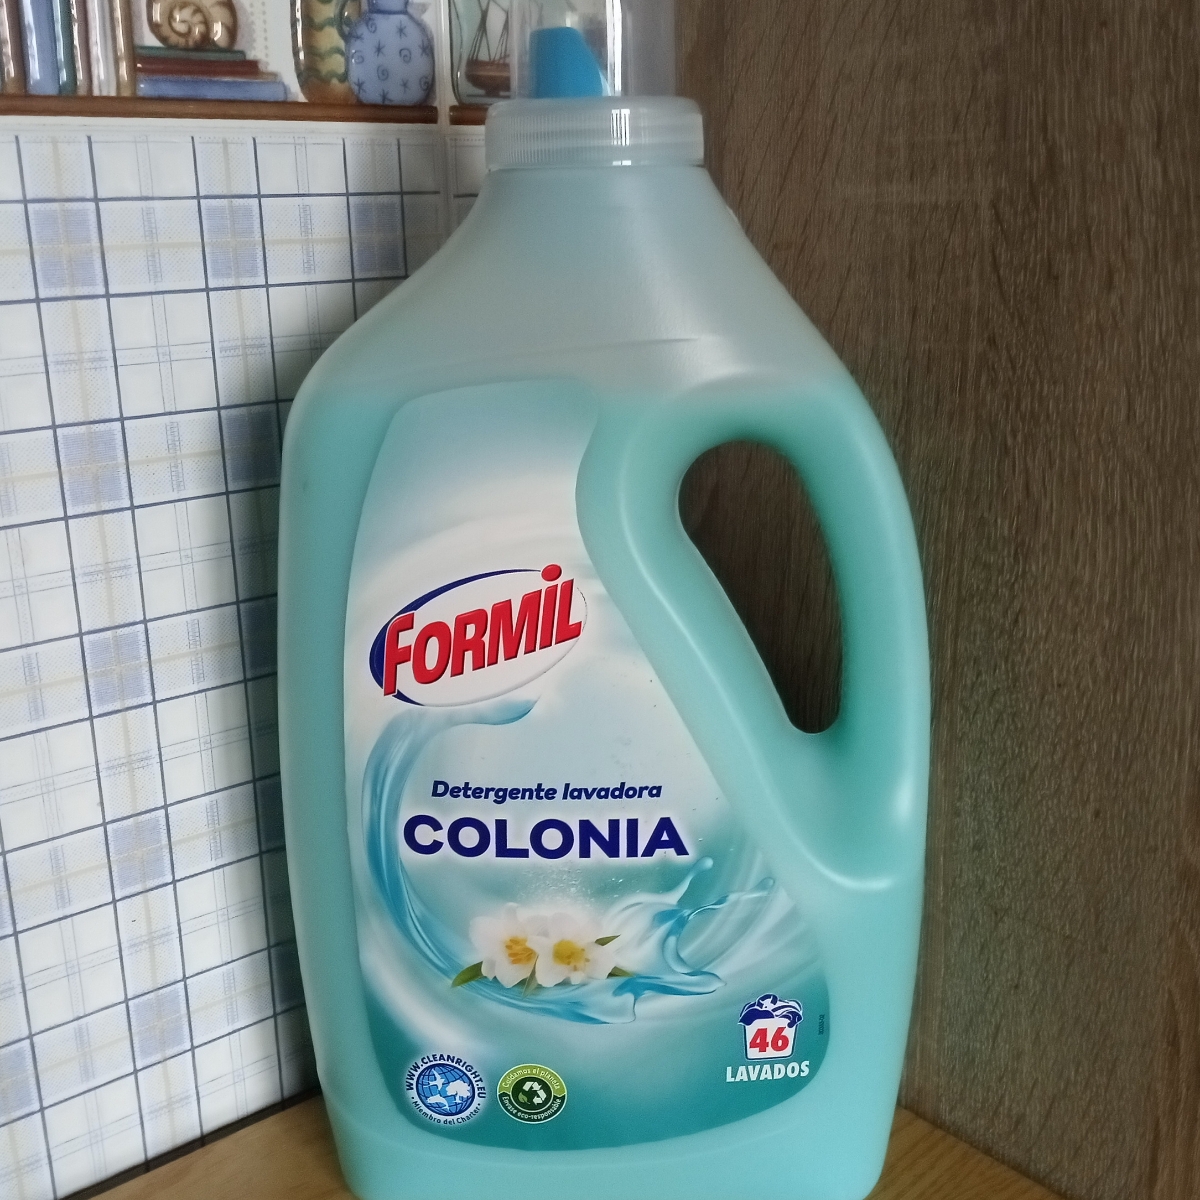 Formil Detergente Lavadora Colonia Reviews | abillion